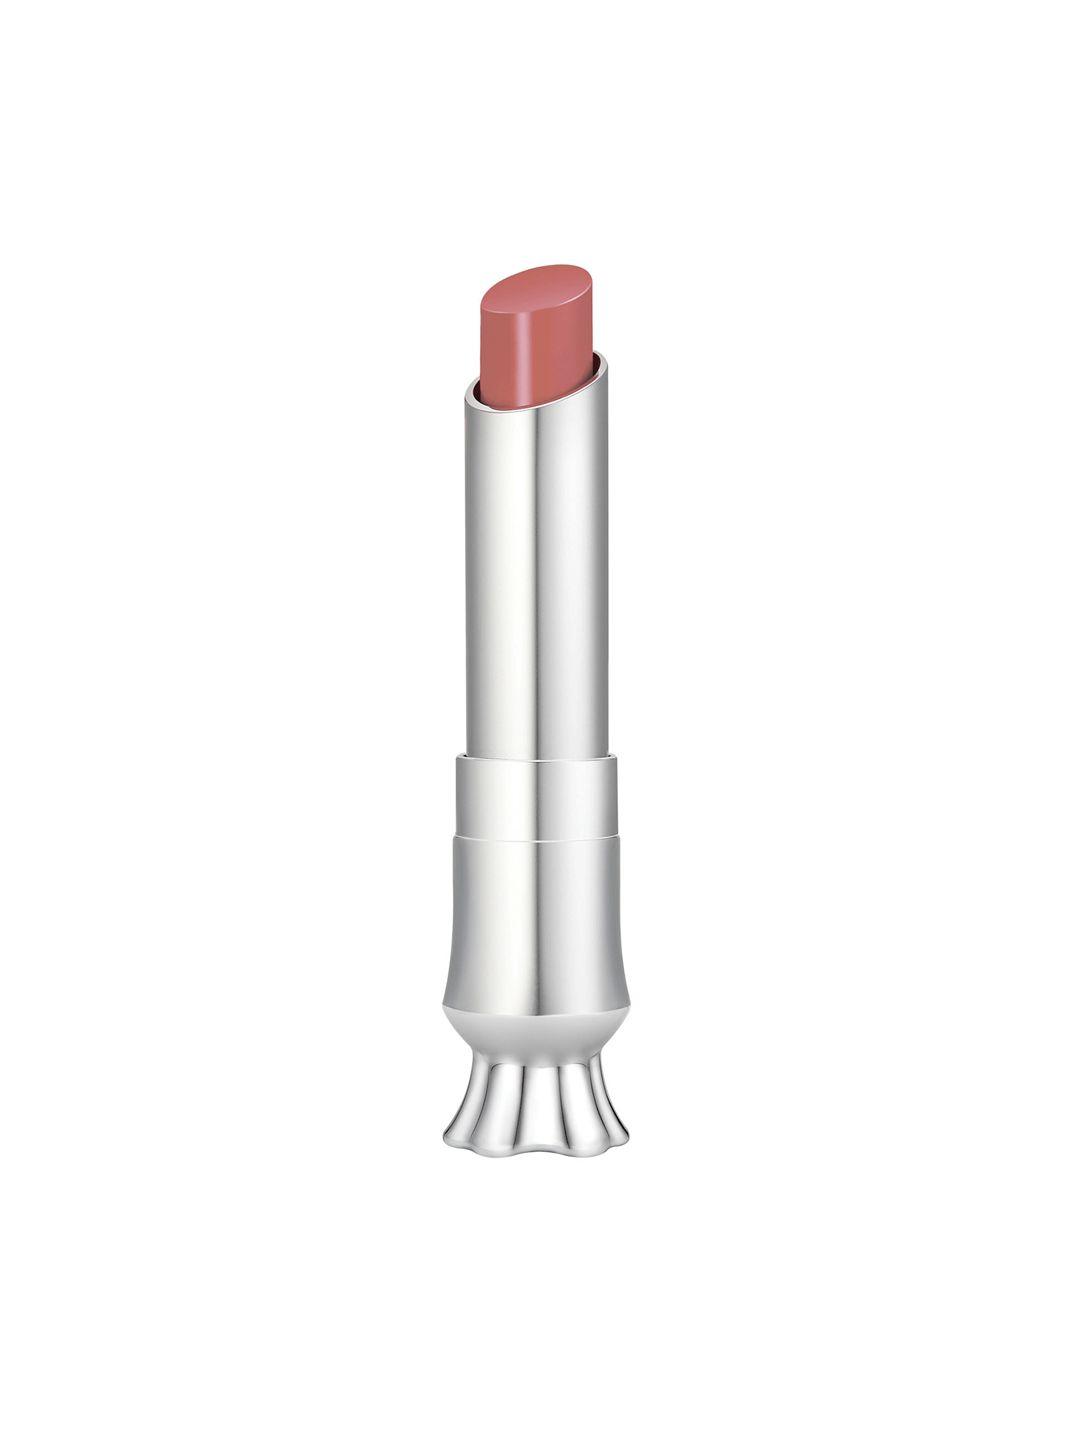 benefit cosmetics california kissin moisturizing color lip balm 3 g - nude pink 55